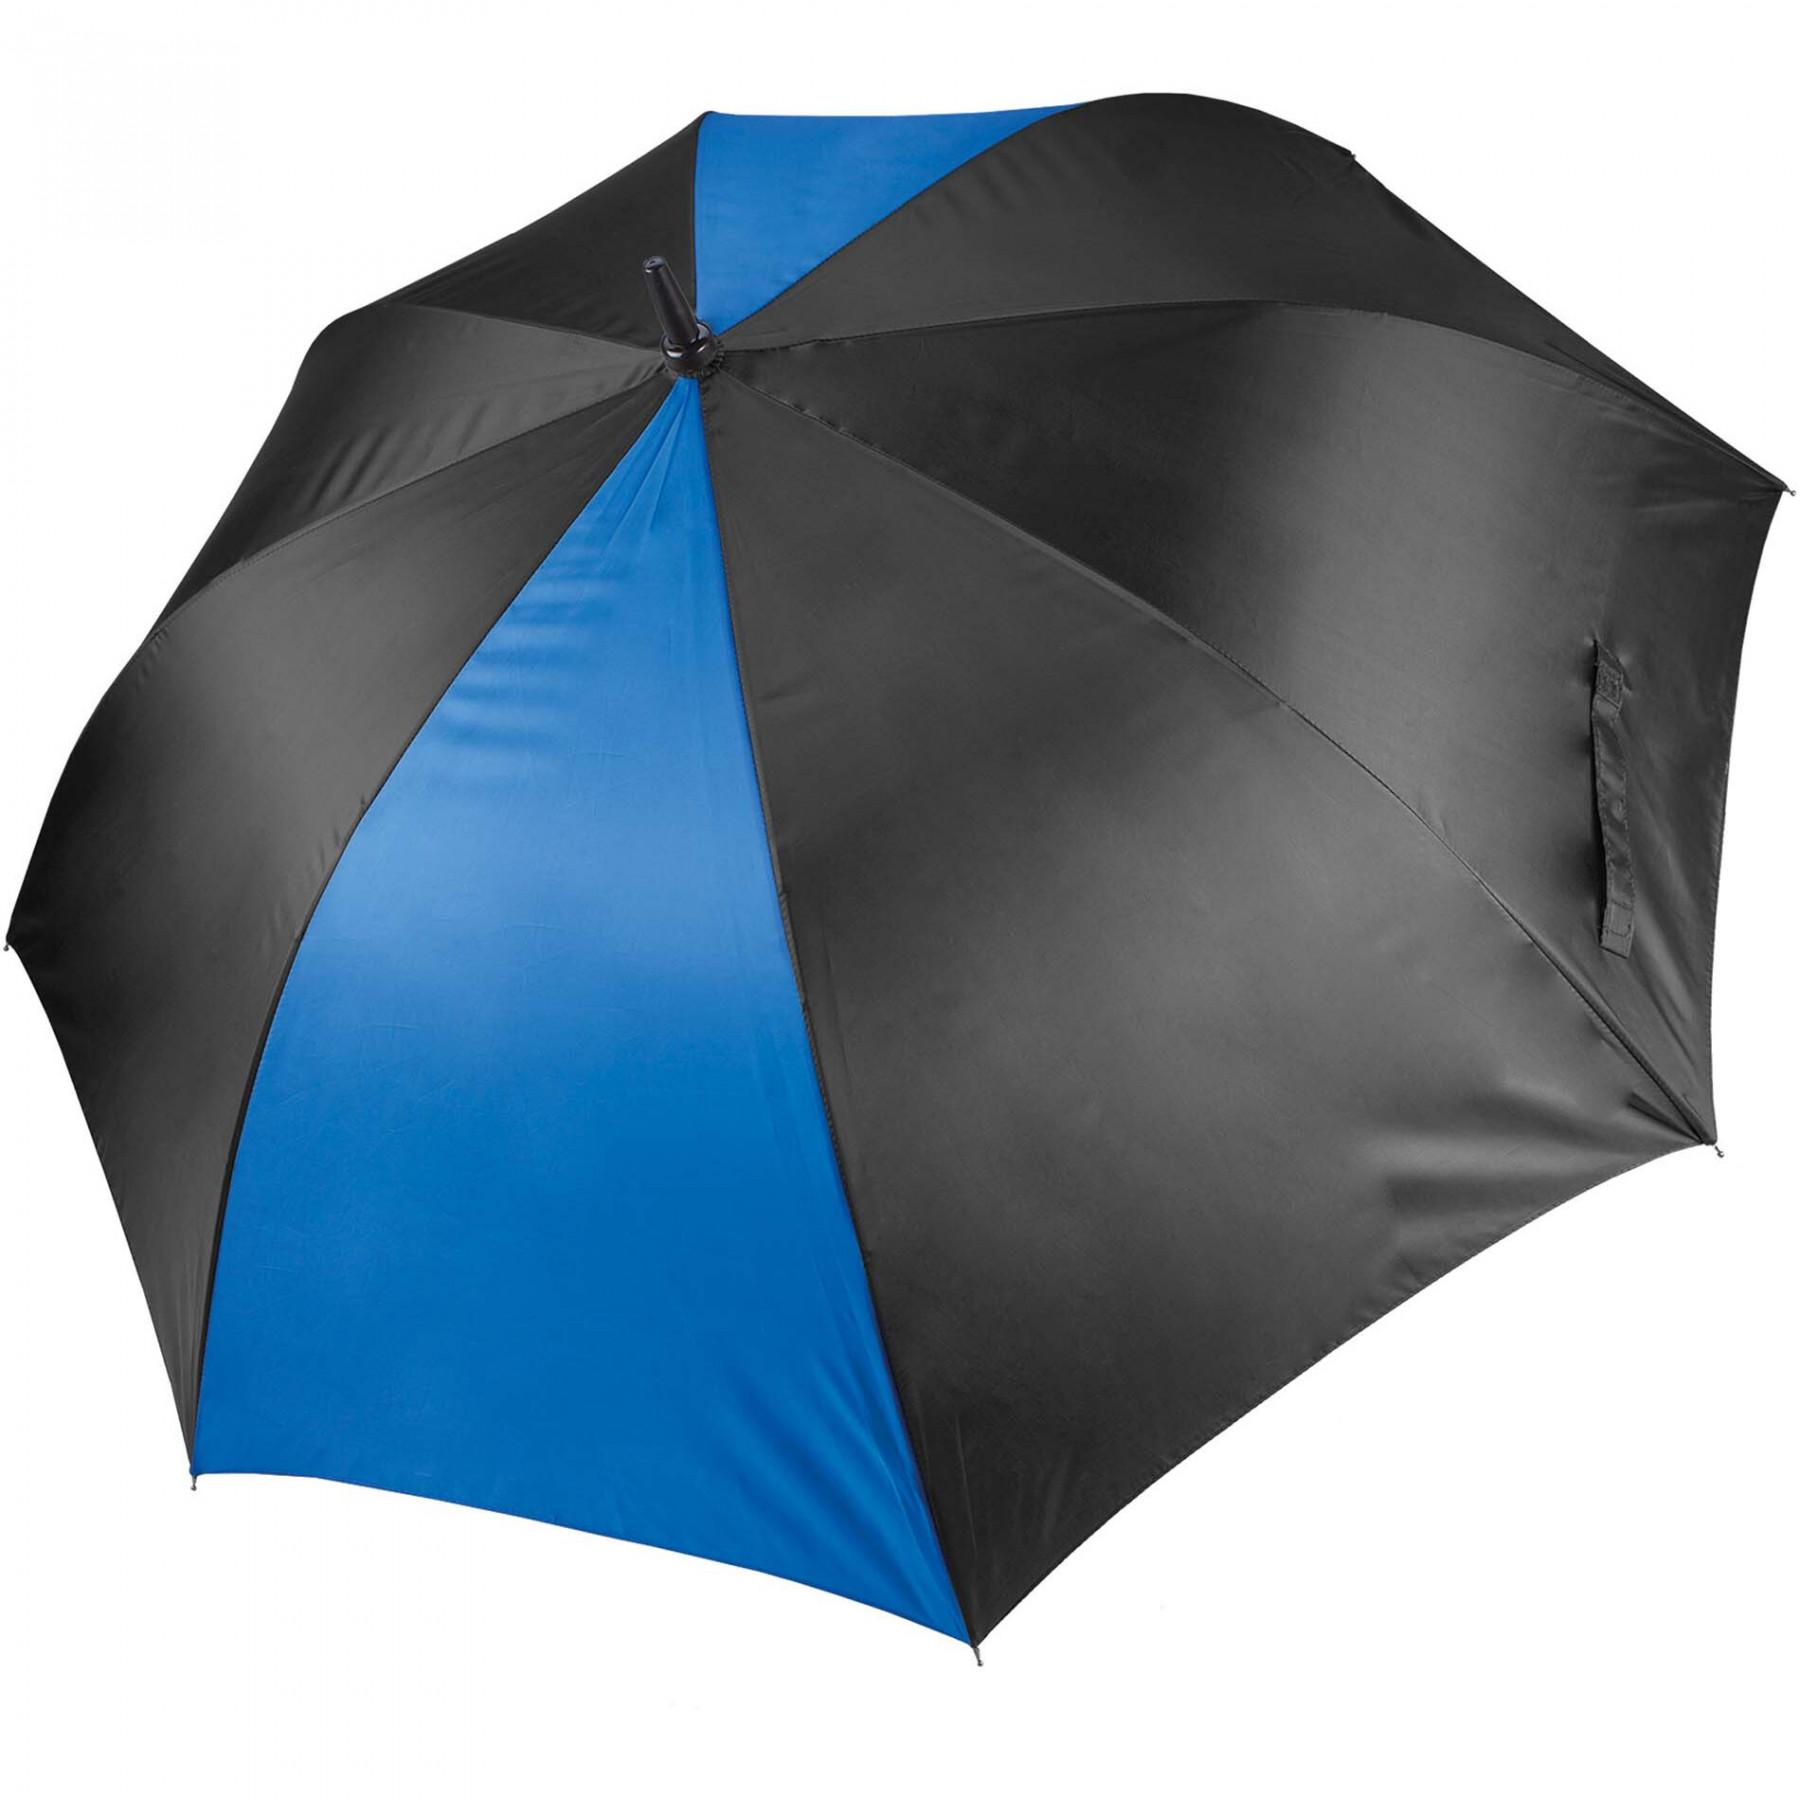 Grande guarda-chuva de golfe Kimood